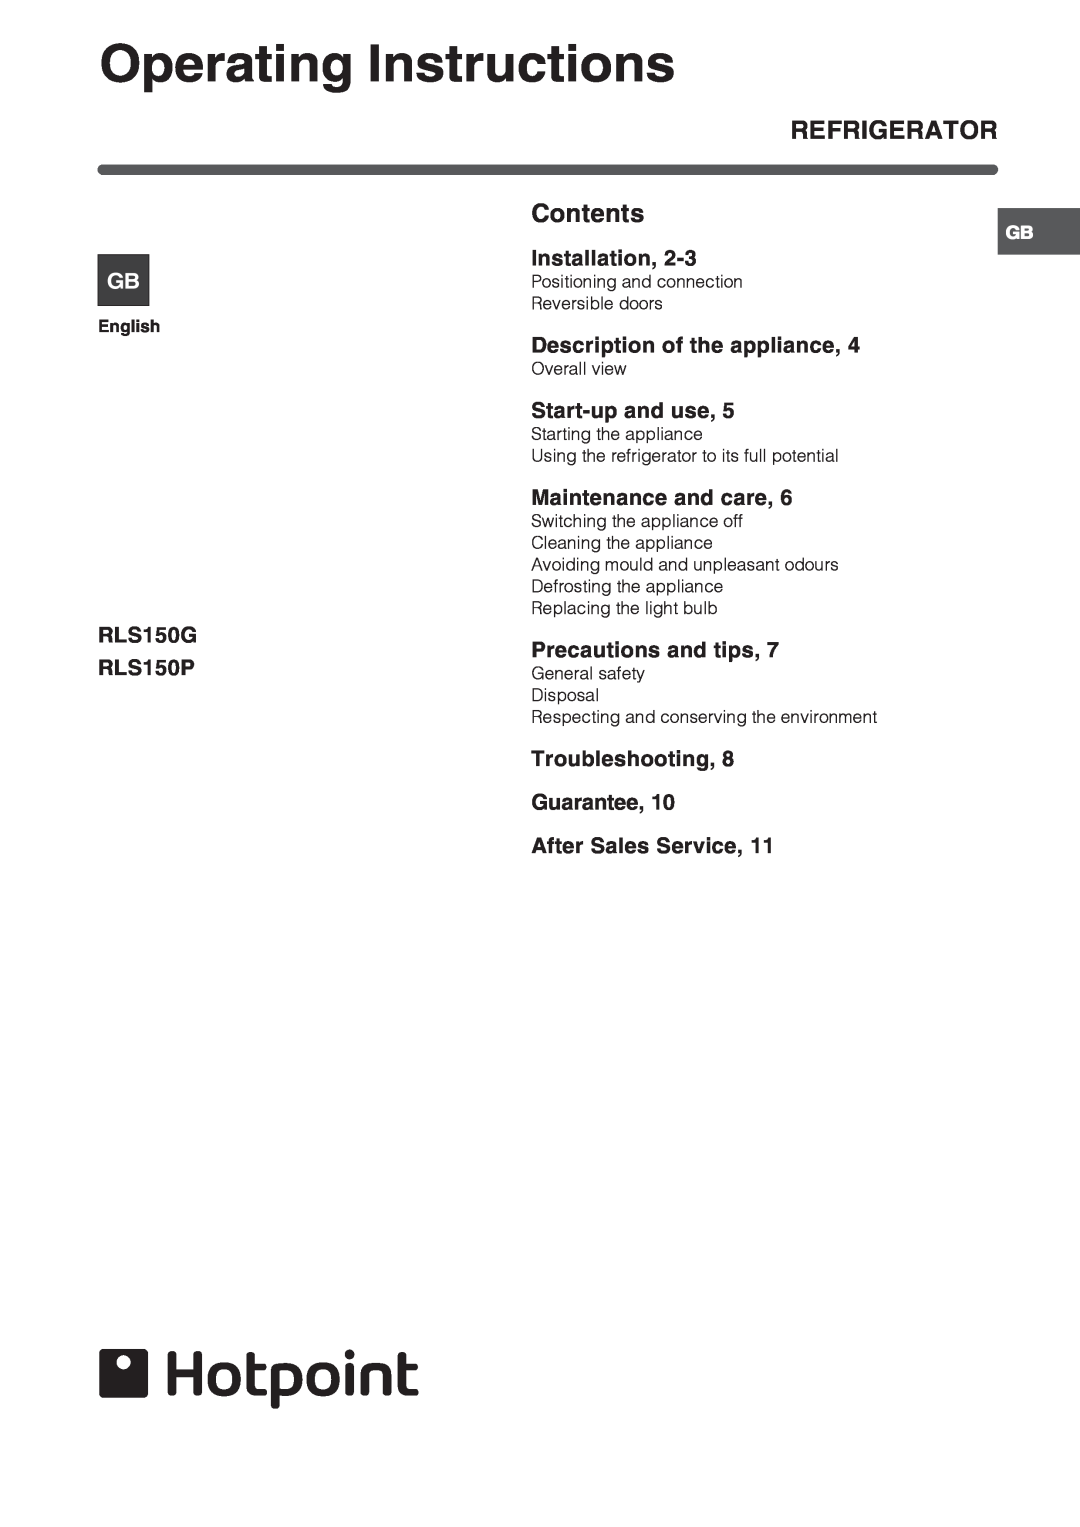 Hotpoint RLS150G manual Operating Instructions, Refrigerator, Contents 